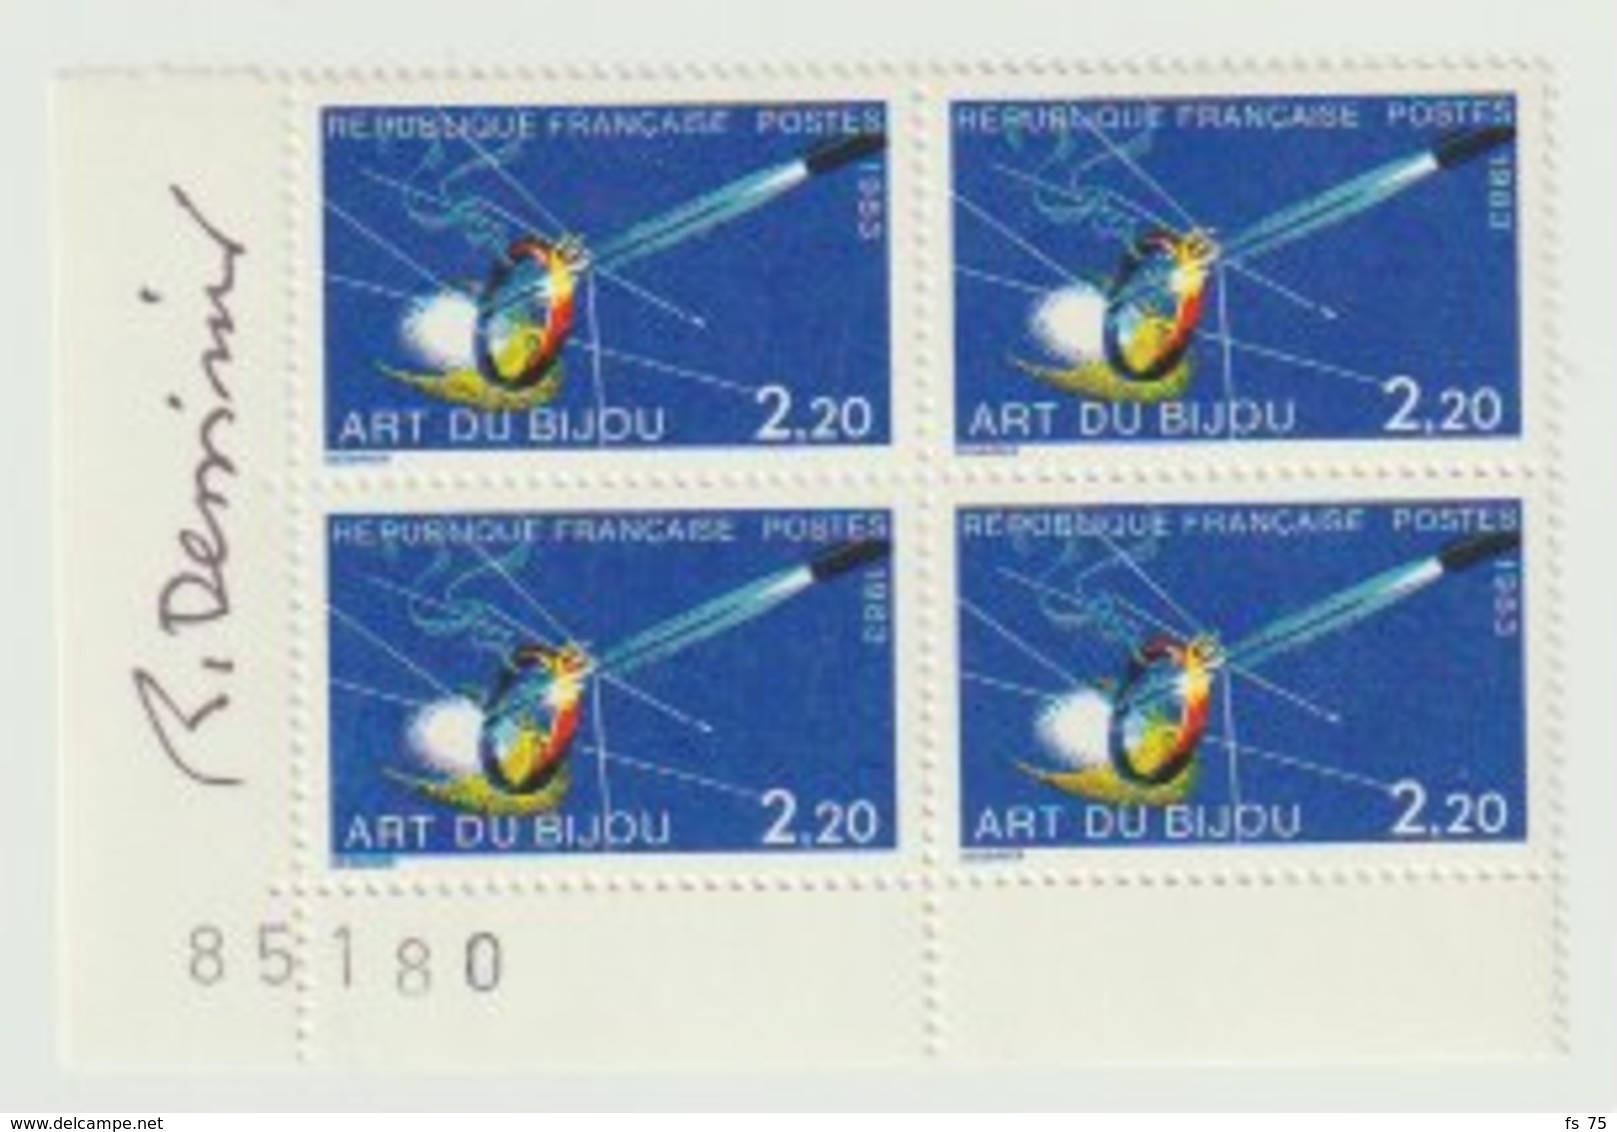 FRANCE - N°2286 - 2F20 - ART DU BIJOU - BLOC DE 4 - SIGNE DESSIRIER - Unused Stamps